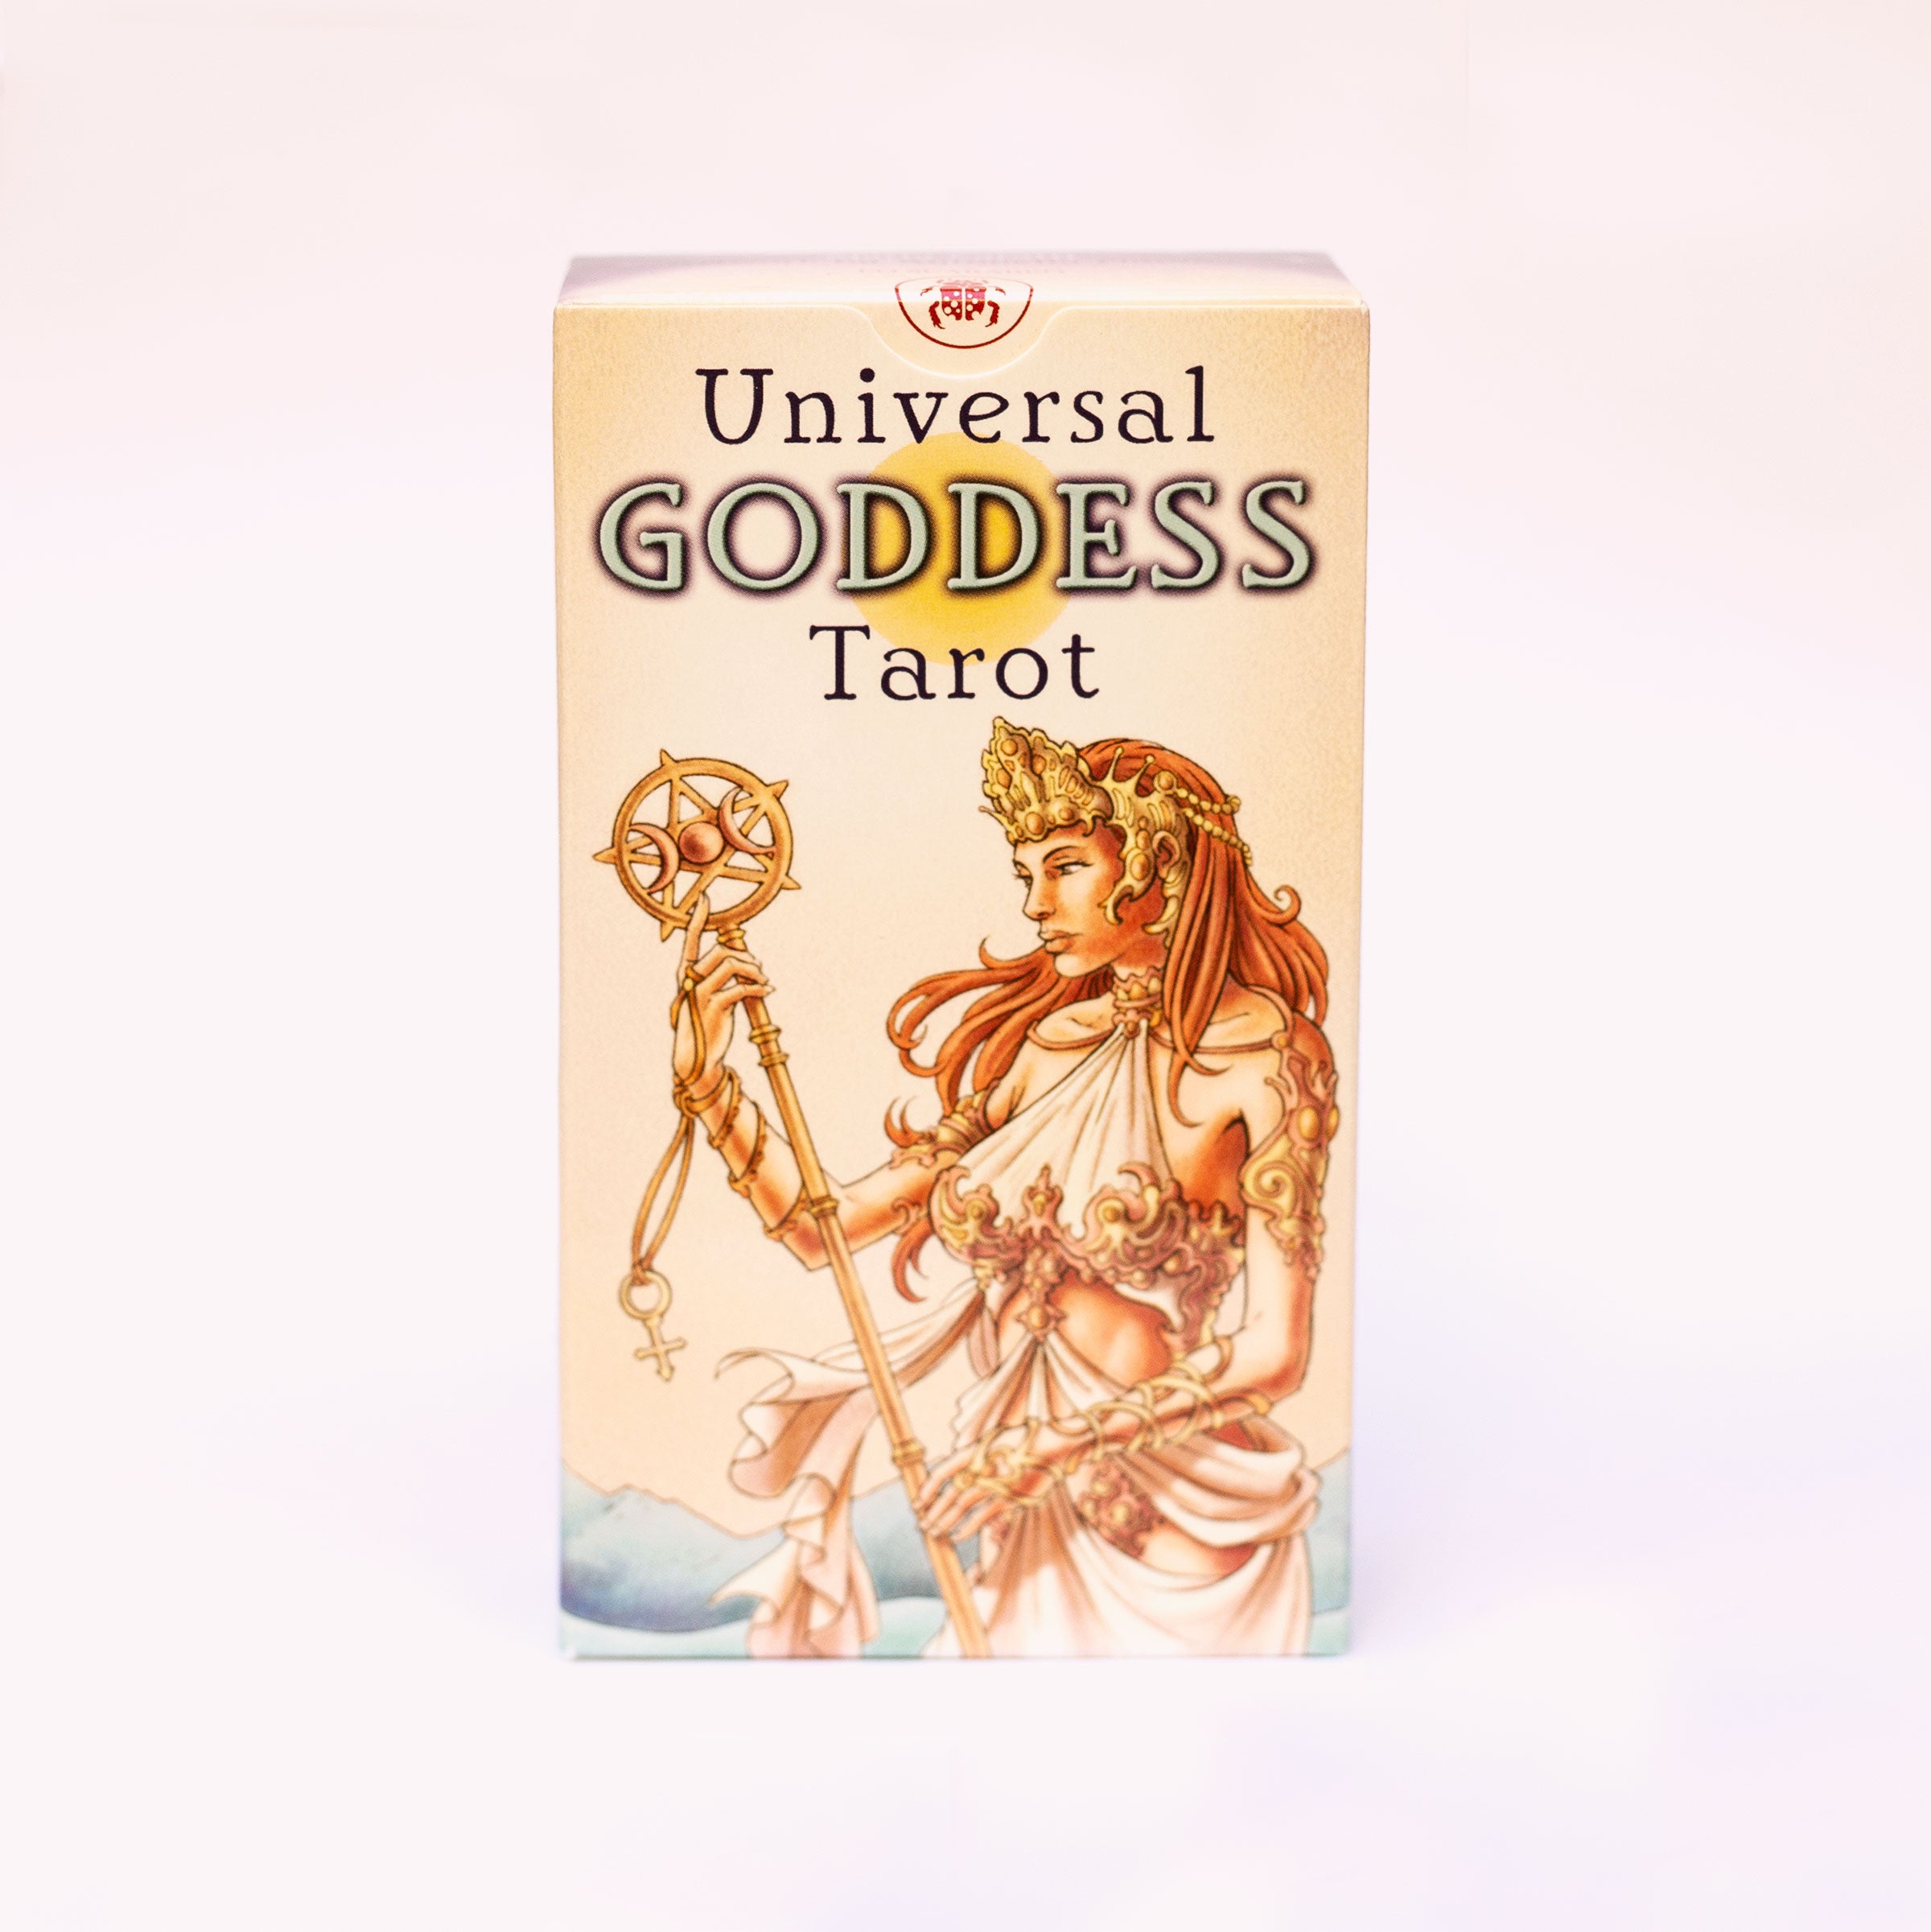 Universal Goddess Tarot